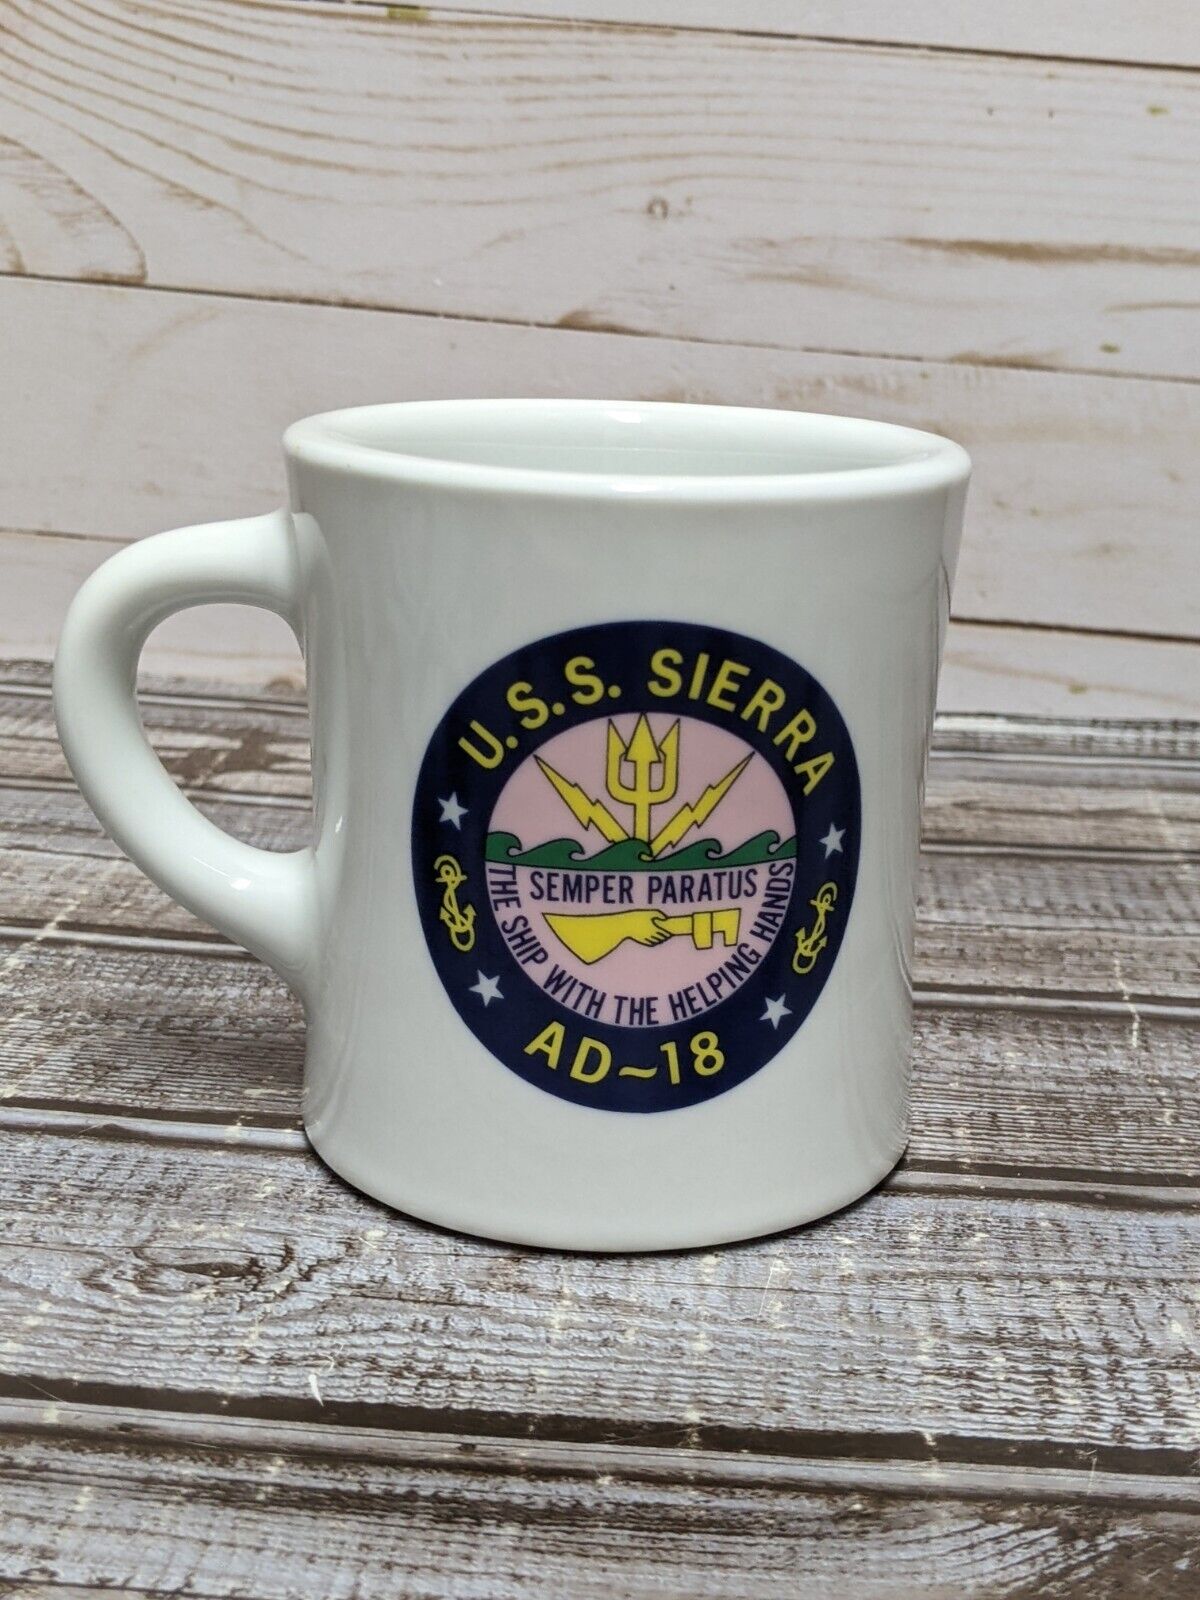 U.S.S Sierra Heavyweight Coffee Cup Mug Navy